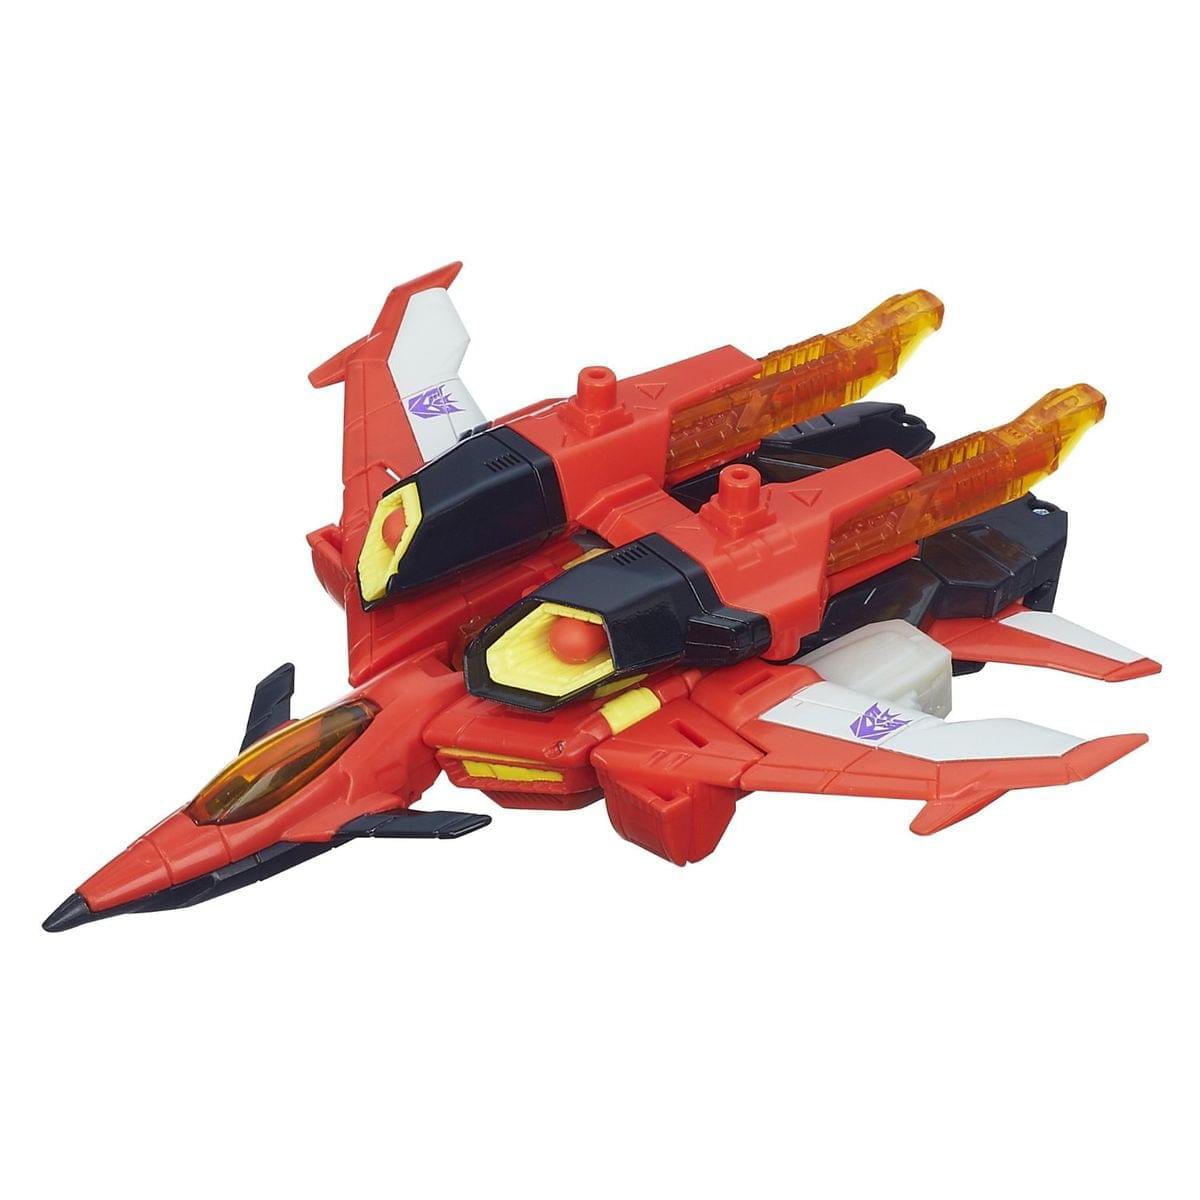 Transformers Generations 30th Anniversary Deluxe Class Armada Starscream Figure for sale online 